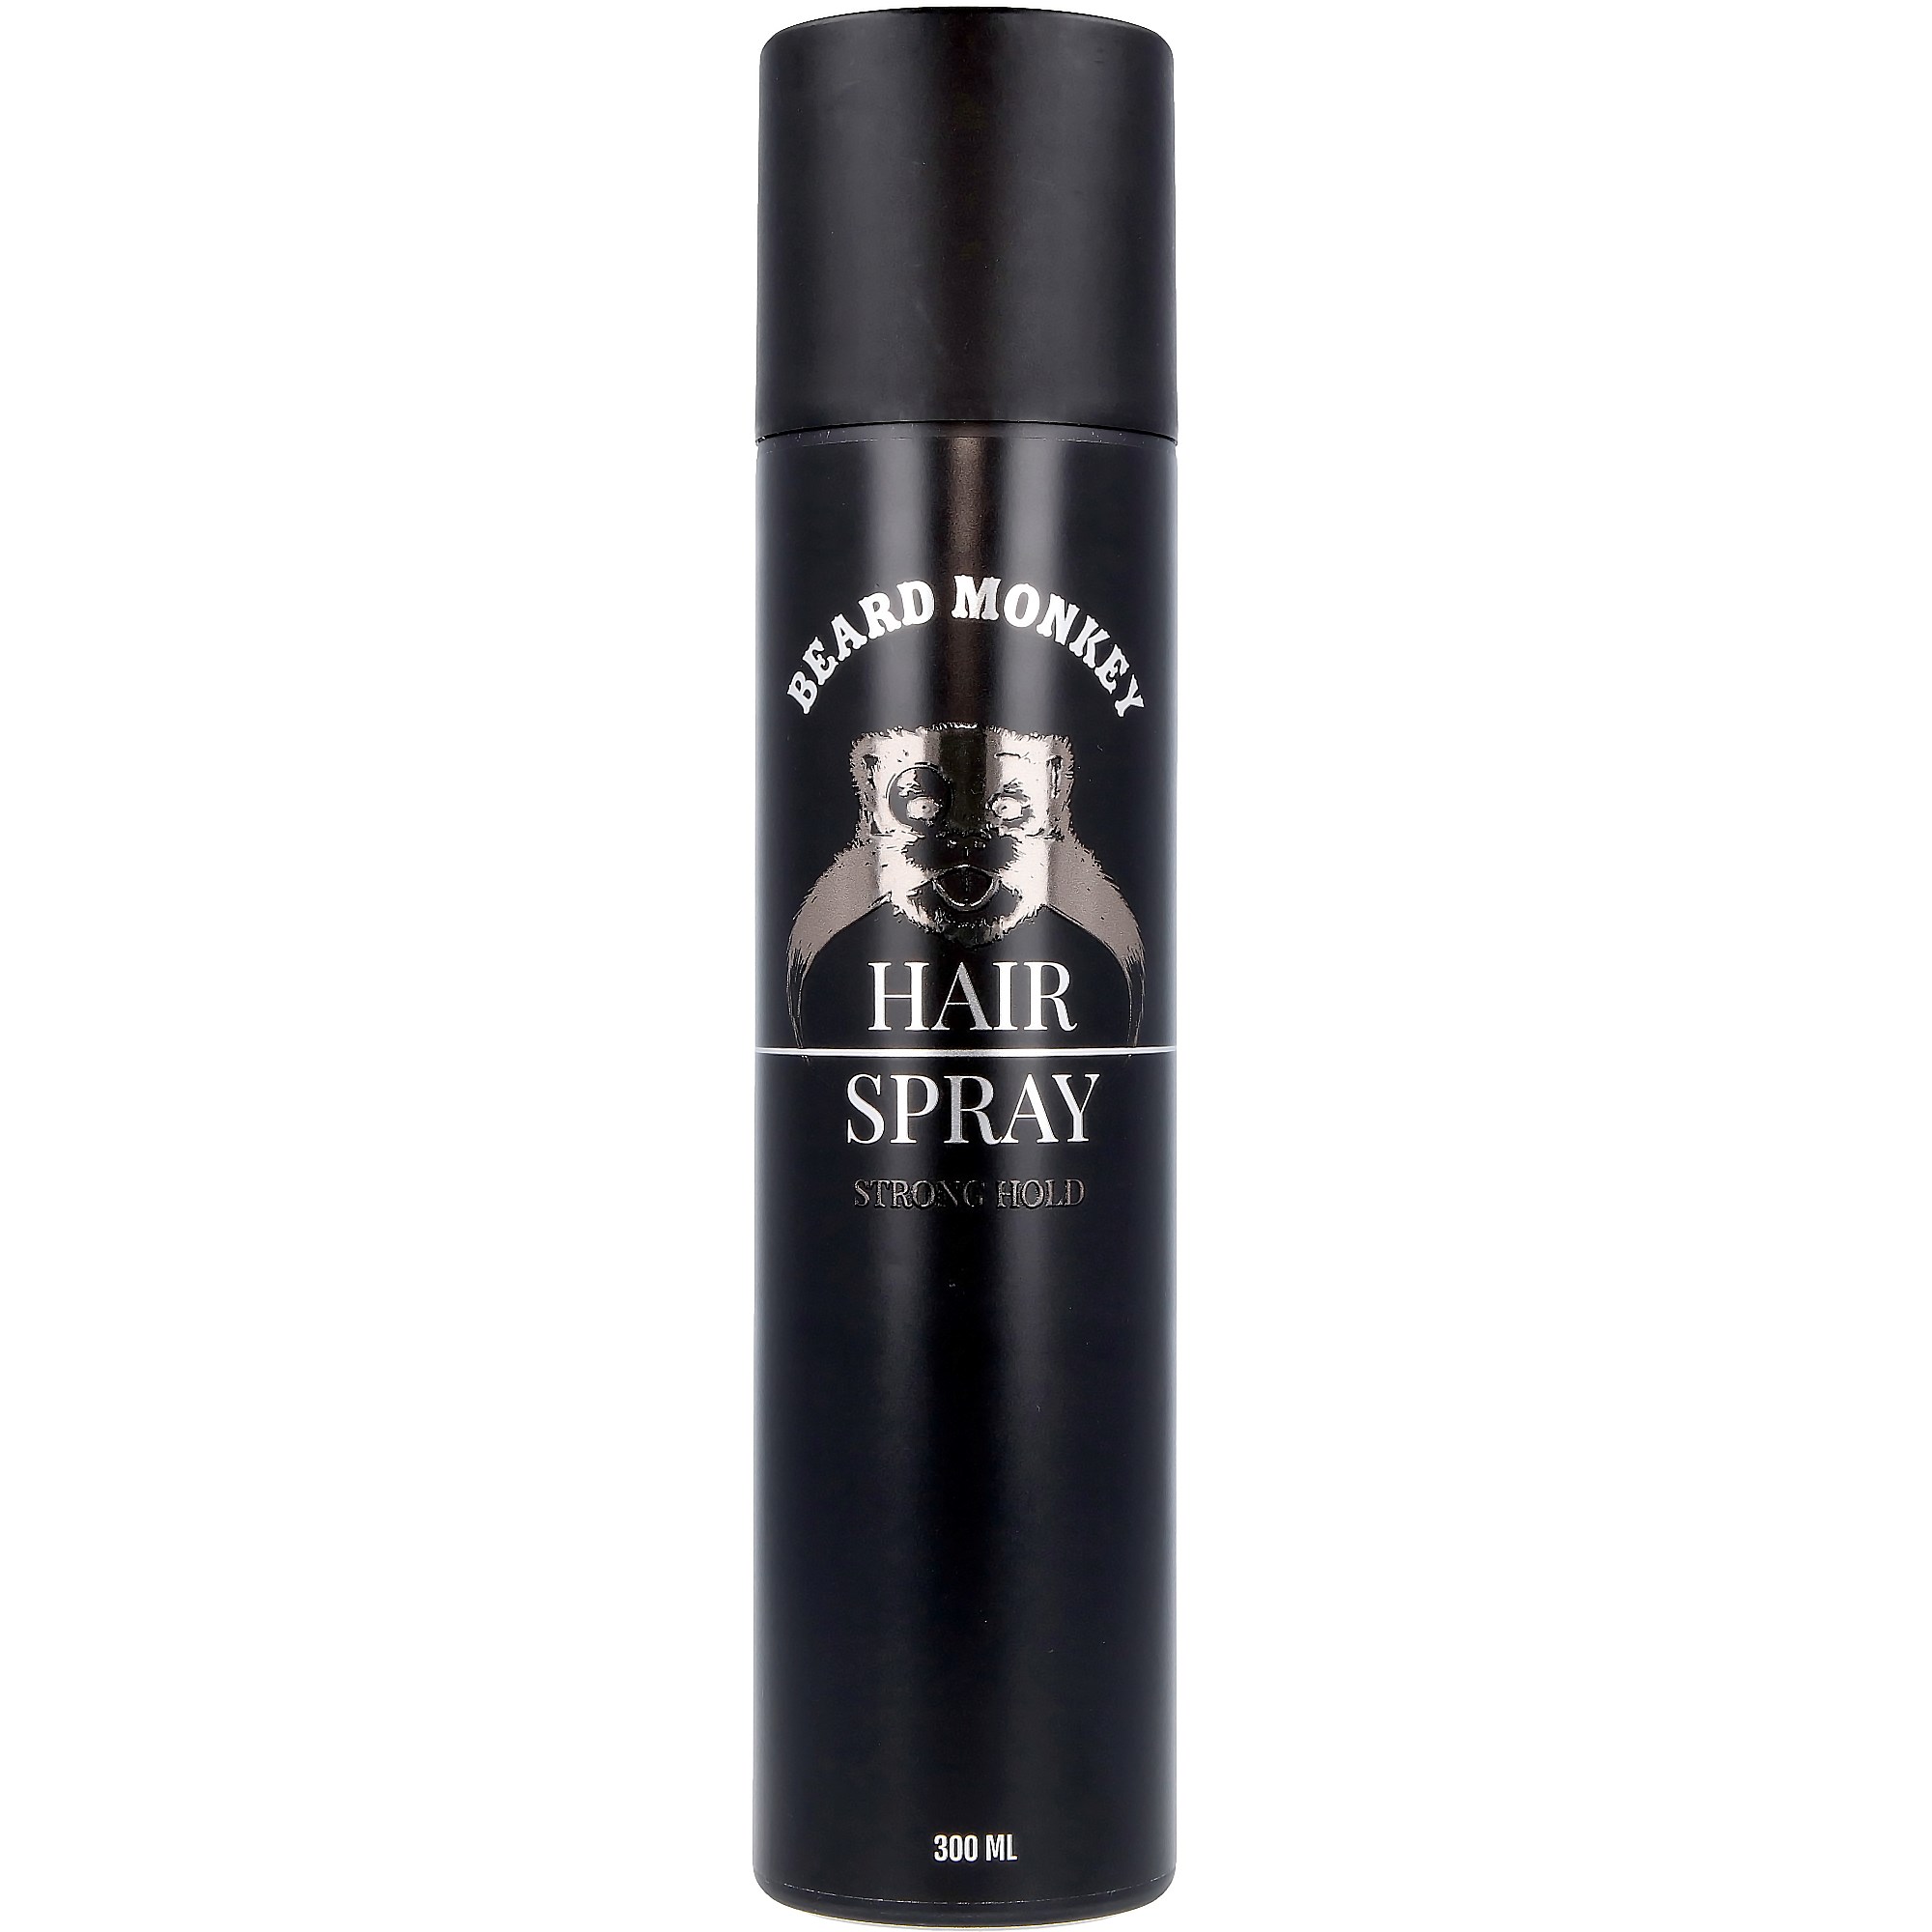 Beard Monkey Hair Spray 300ml